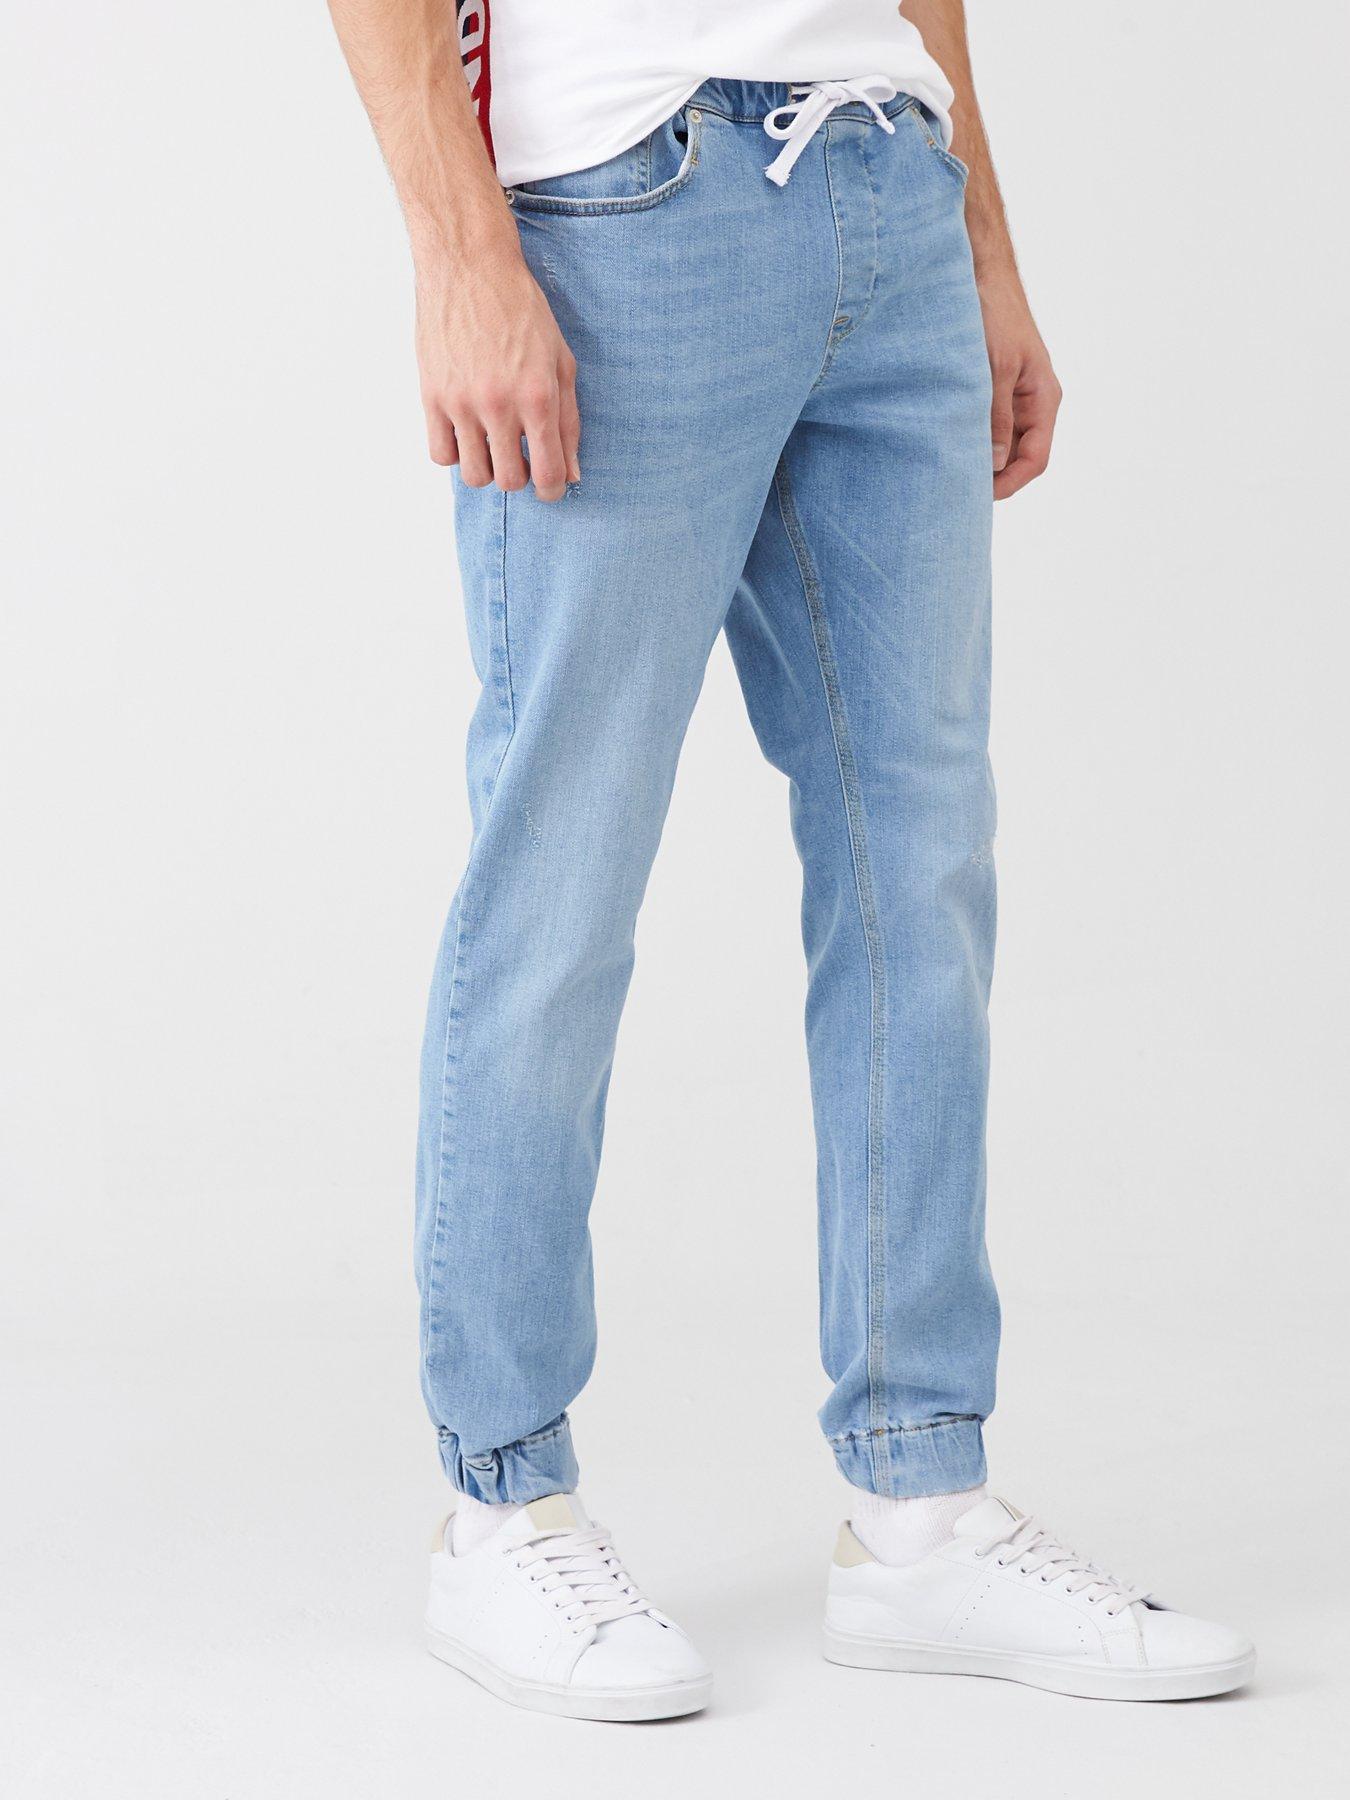 river island jogger jeans